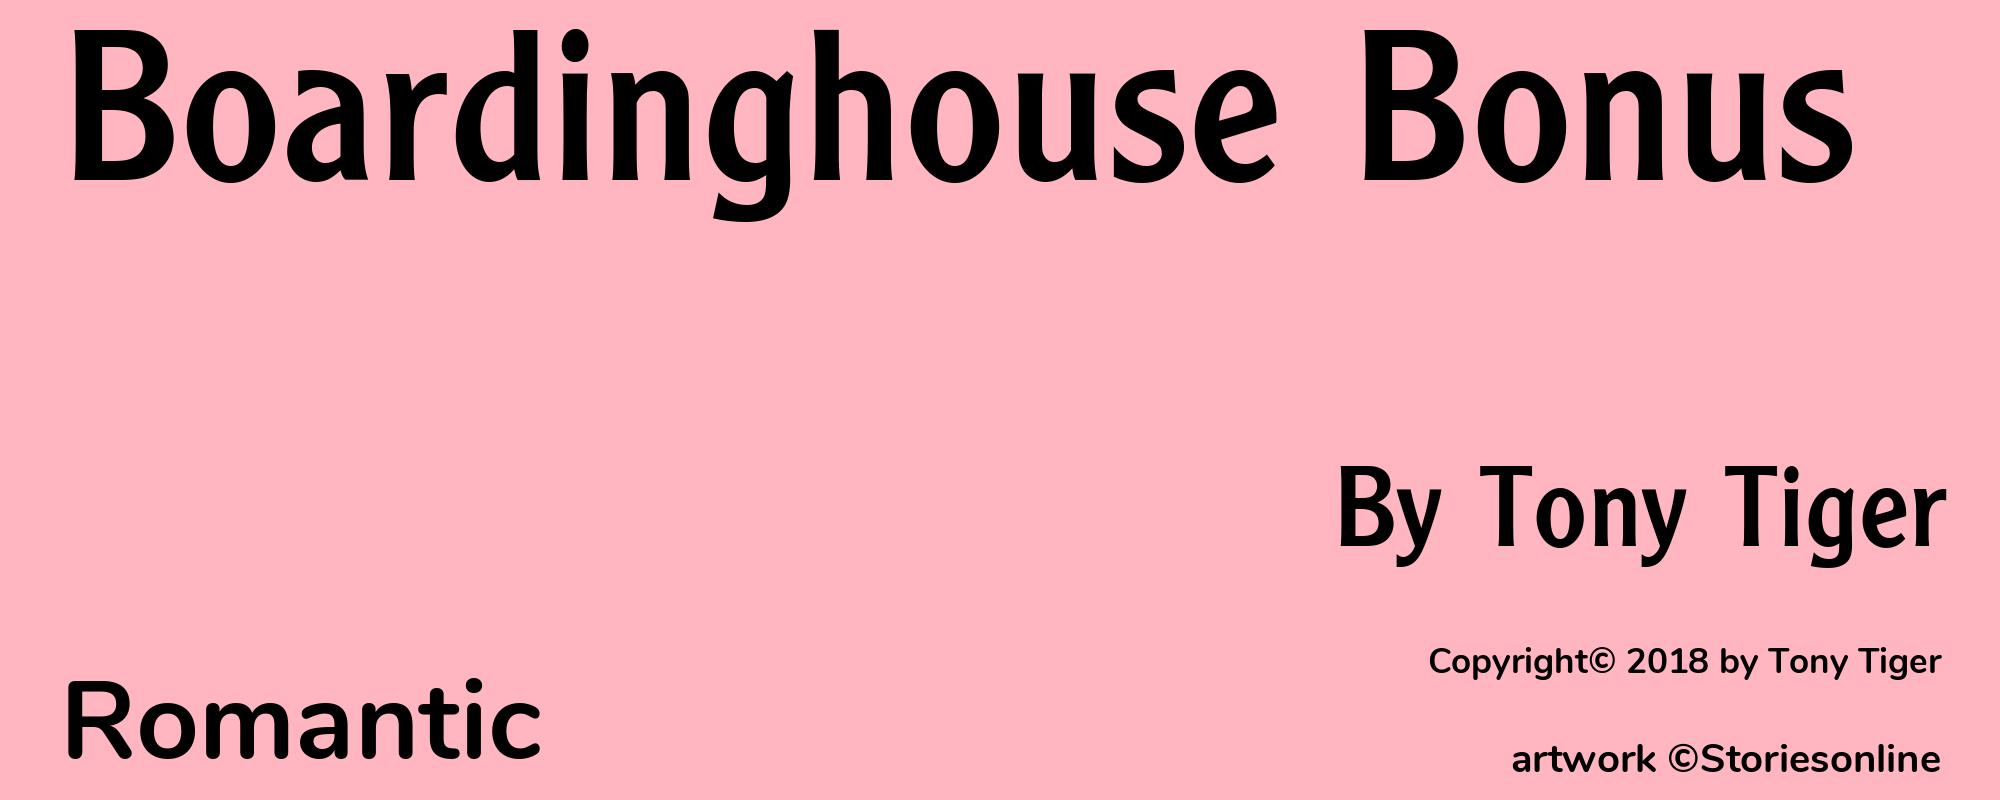 Boardinghouse Bonus - Cover